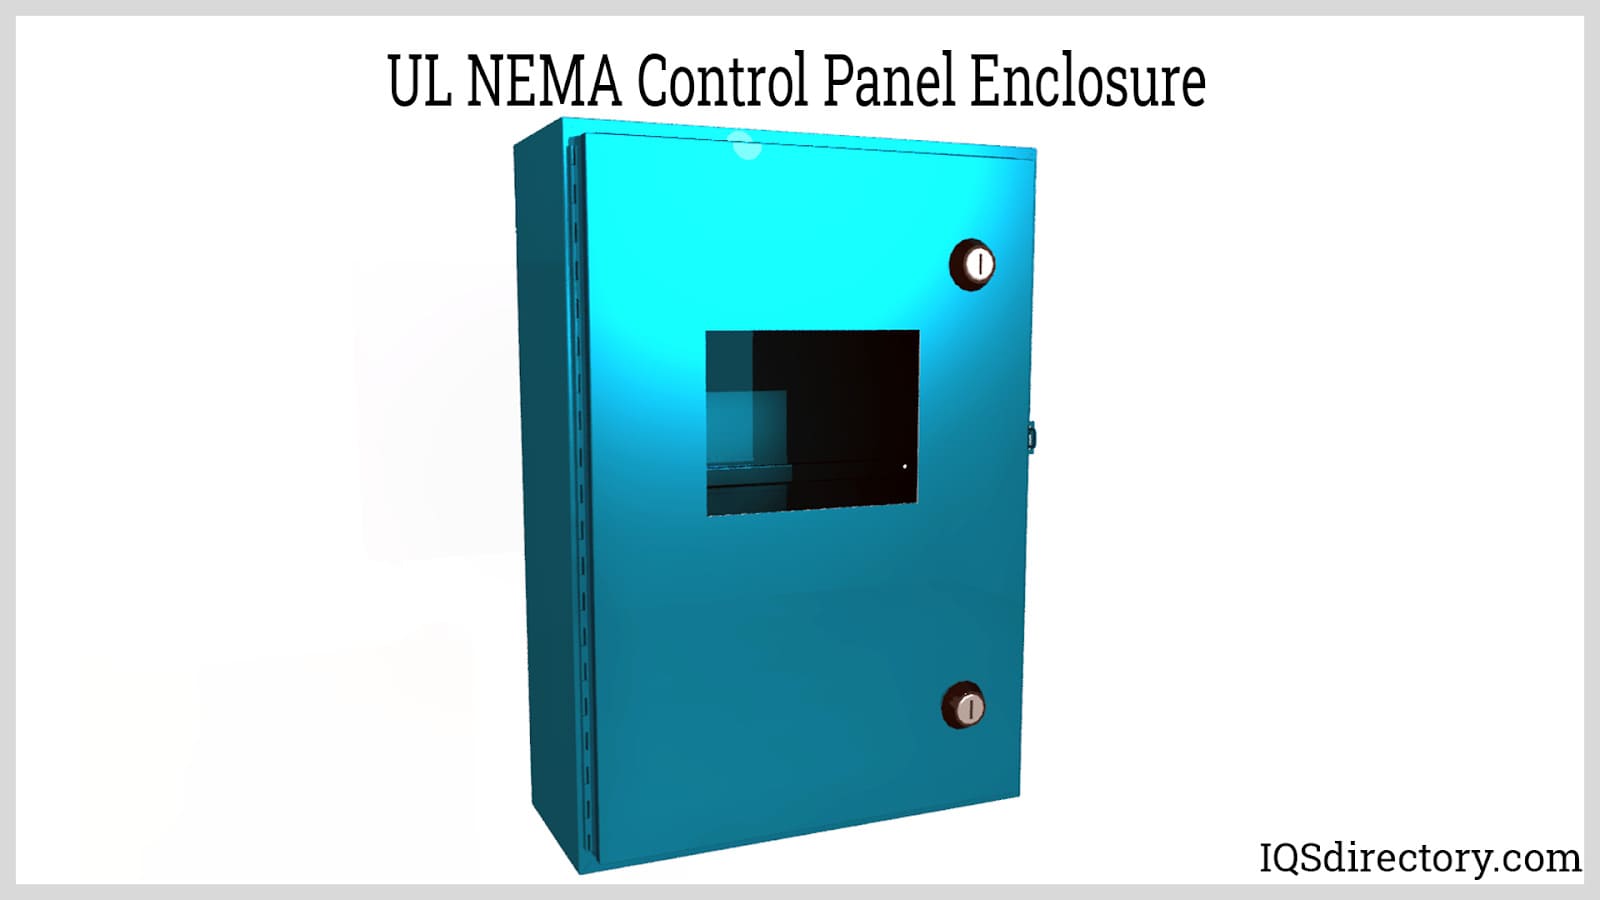 UL NEMA Control Panel Enclosure